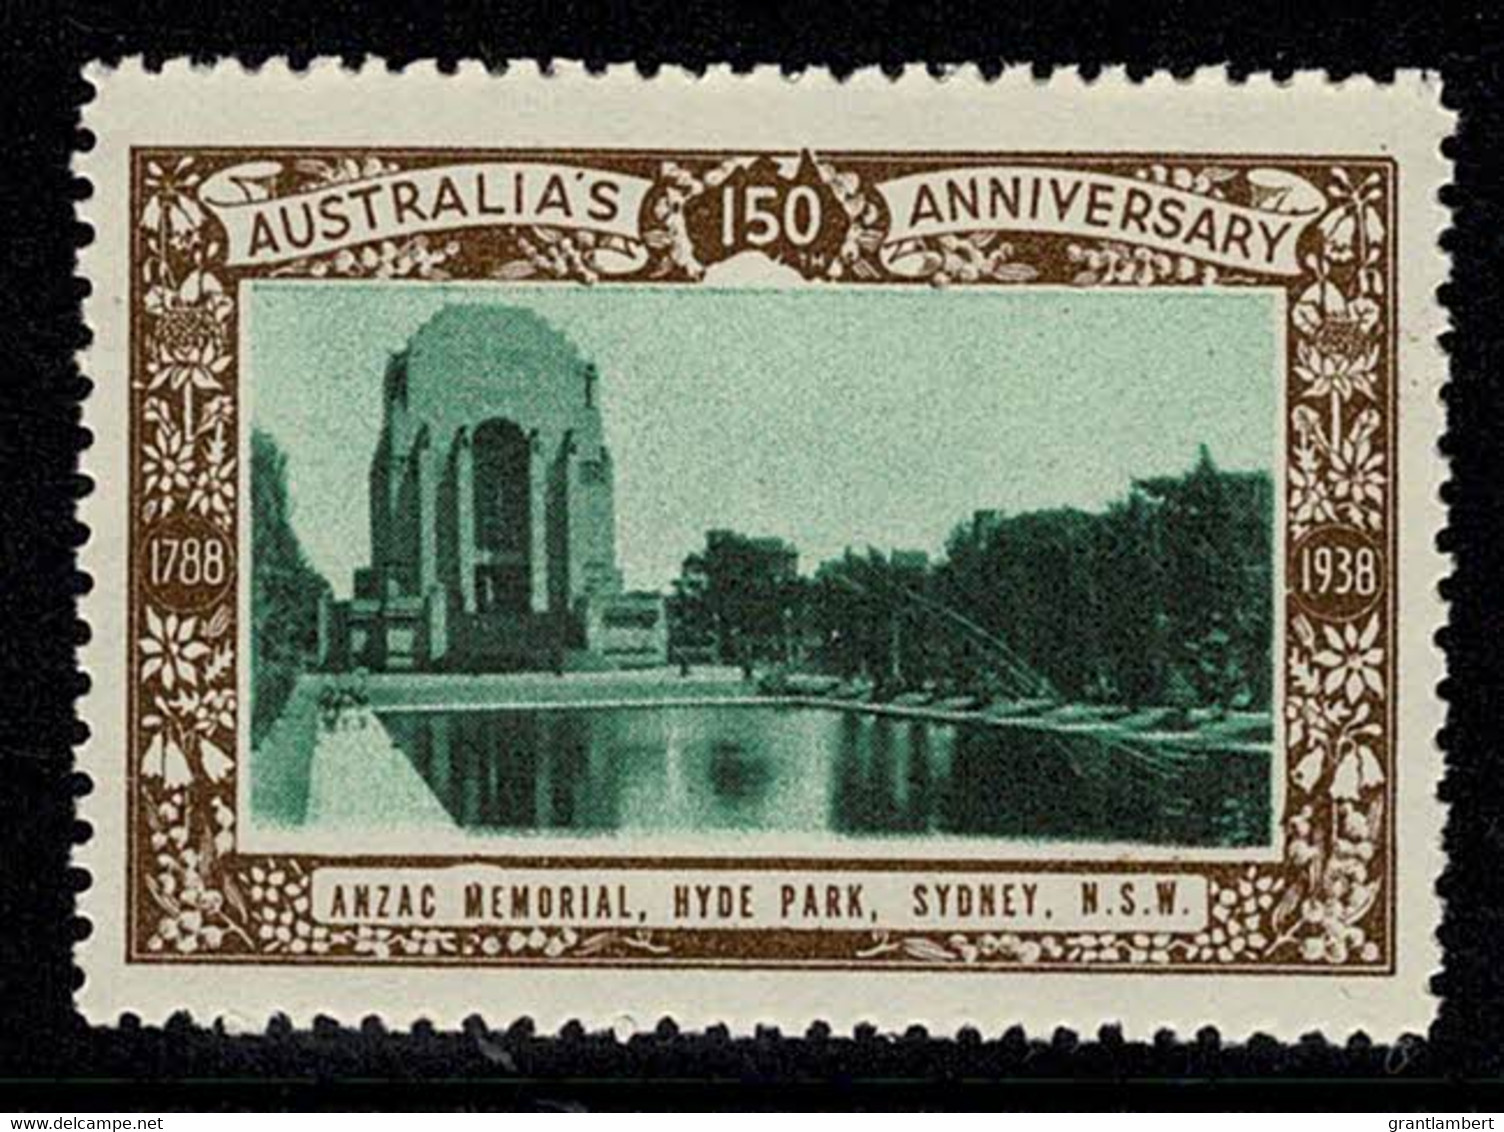 Australia 1938 ANZAC Memorial, Hyde Park, Sydney - NSW 150th Anniversary Cinderella MNH - Cinderella